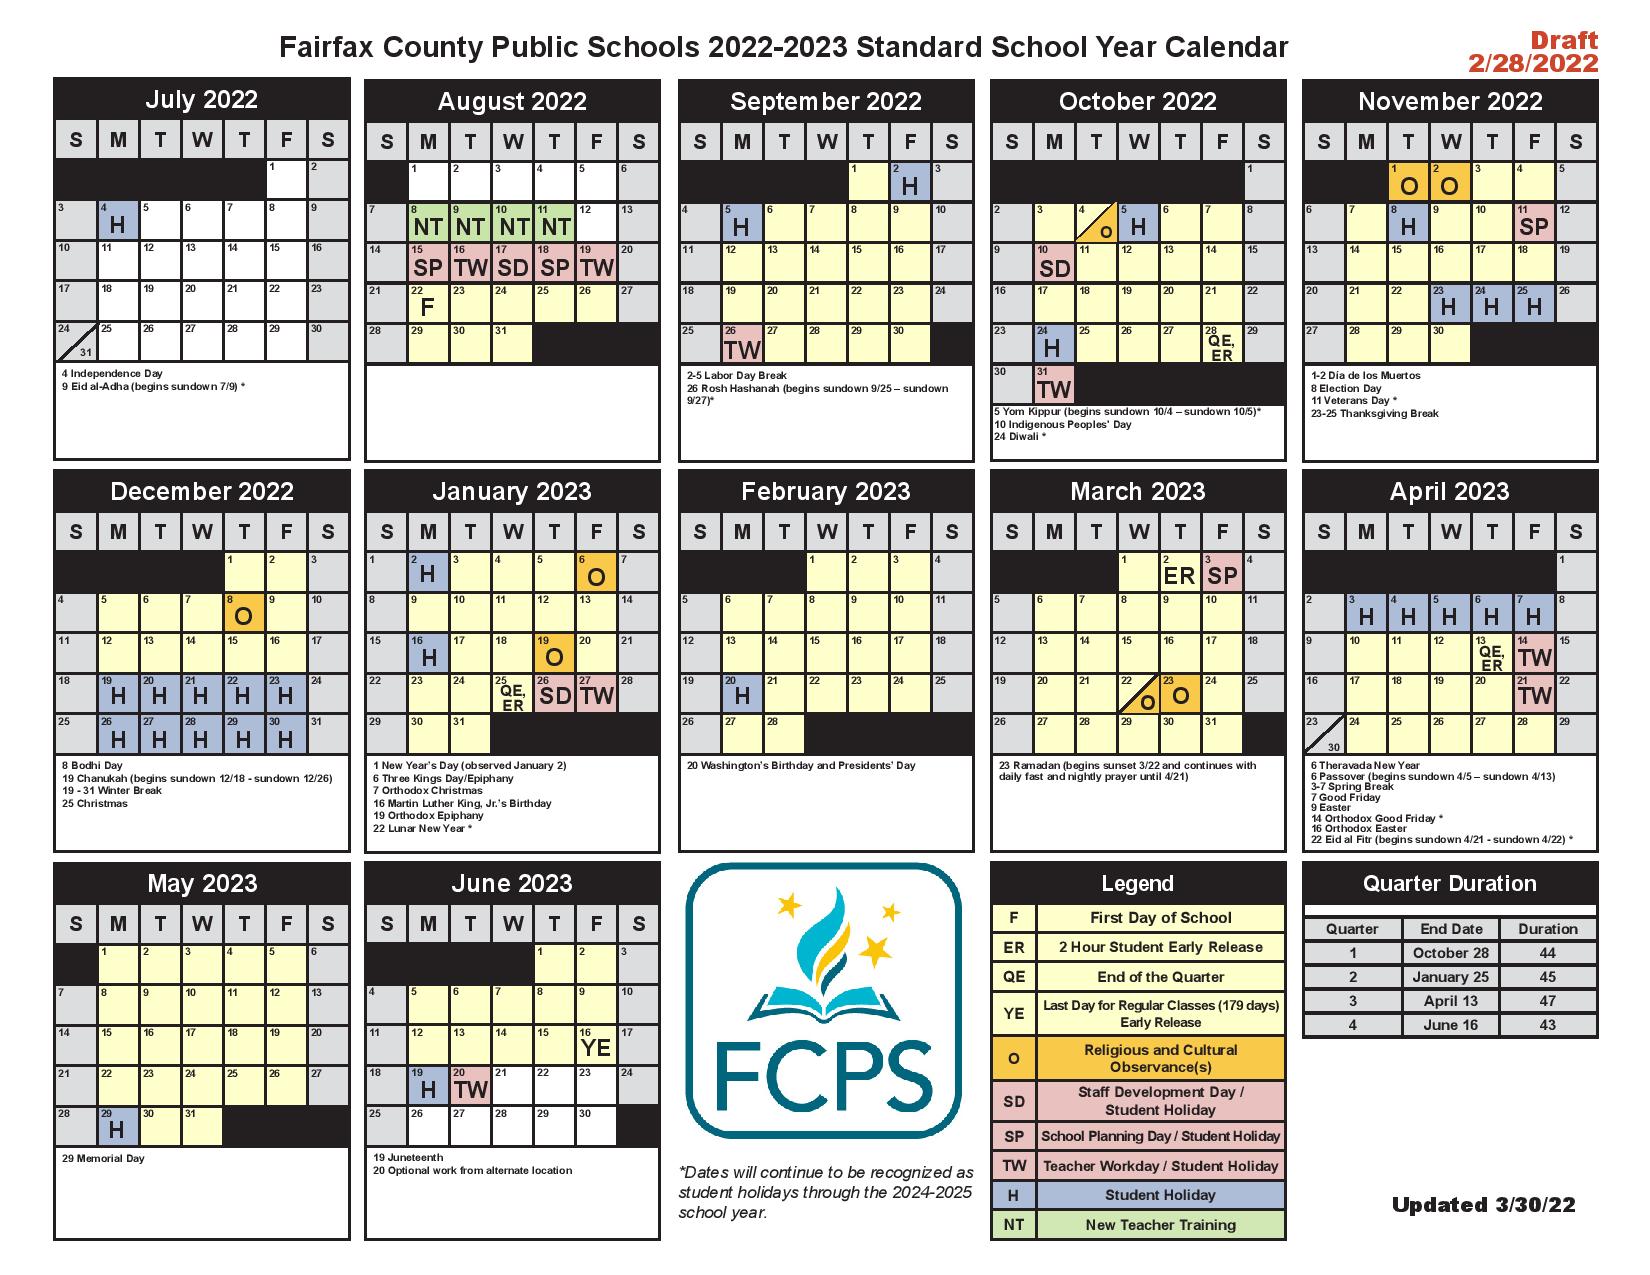 Fairfax County Public Schools Calendar 20222023 & Holidays